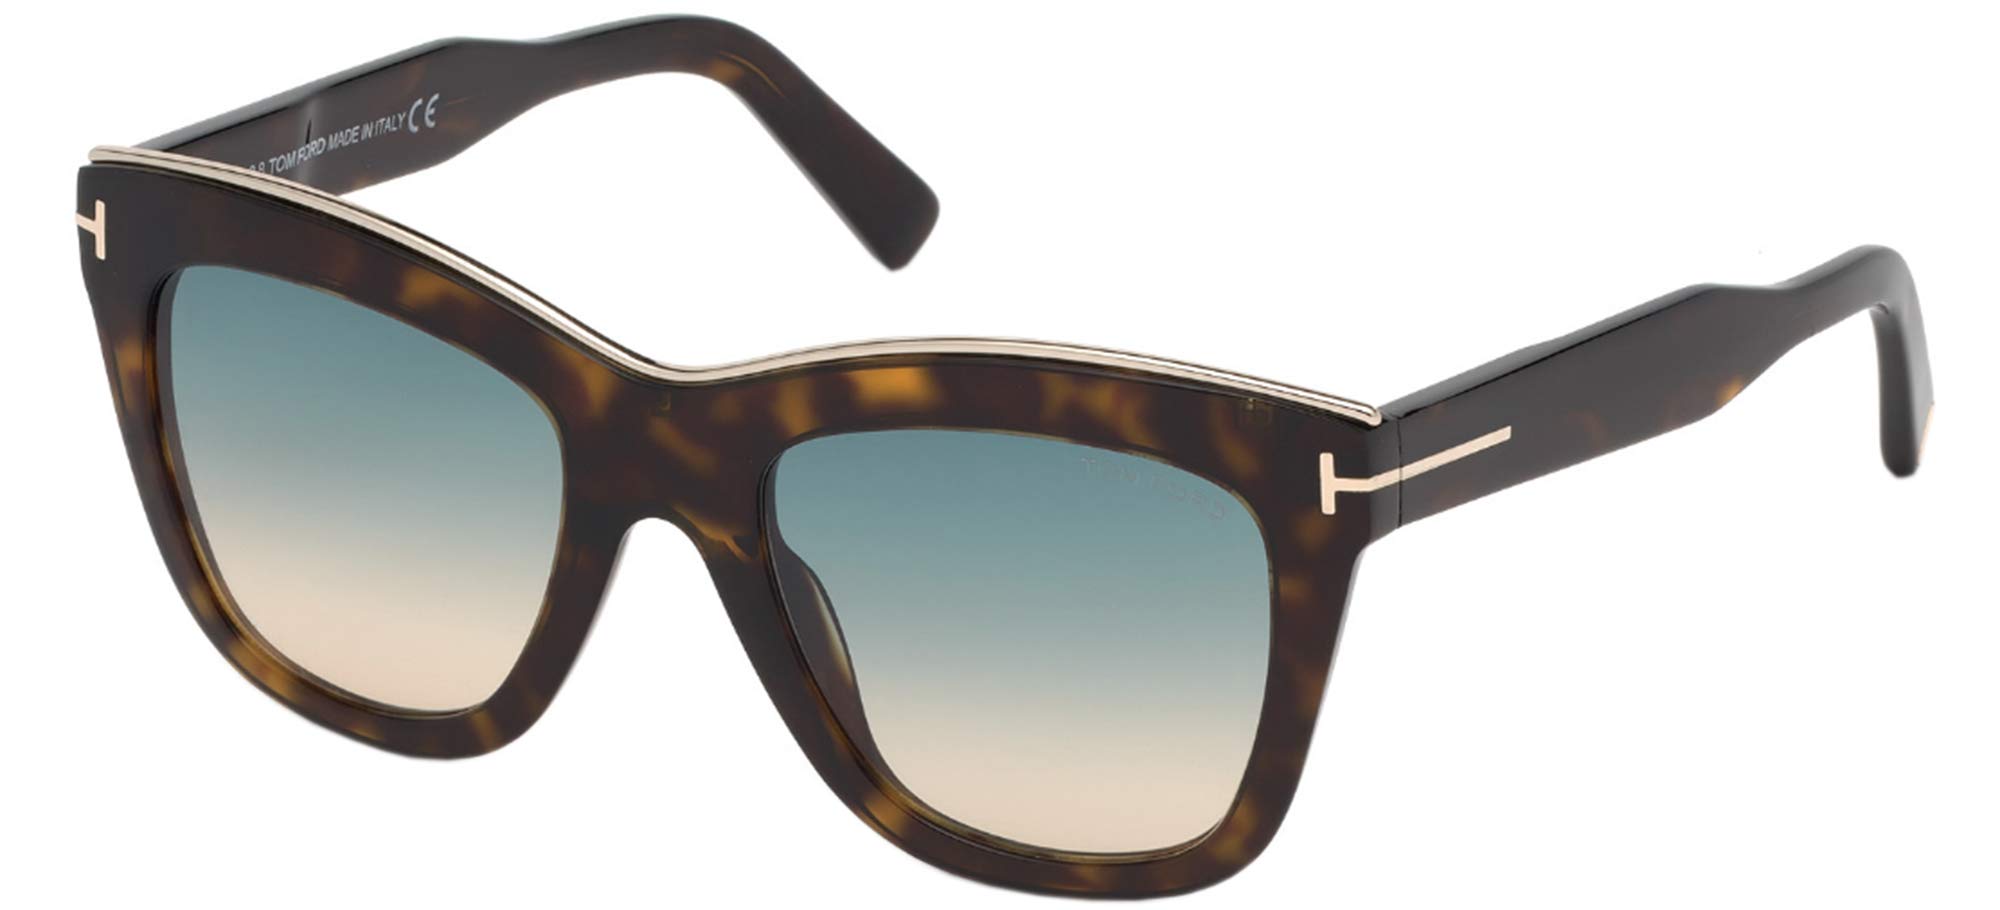 Mua Sunglasses Tom Ford FT 0685 Julie 52P Shiny Dark Havana/Gradient  Turquoise-To-, Shiny Dark Havana / Gradient Turquoise-to-sand Len,  52/20/140 trên Amazon Mỹ chính hãng 2023 | Giaonhan247